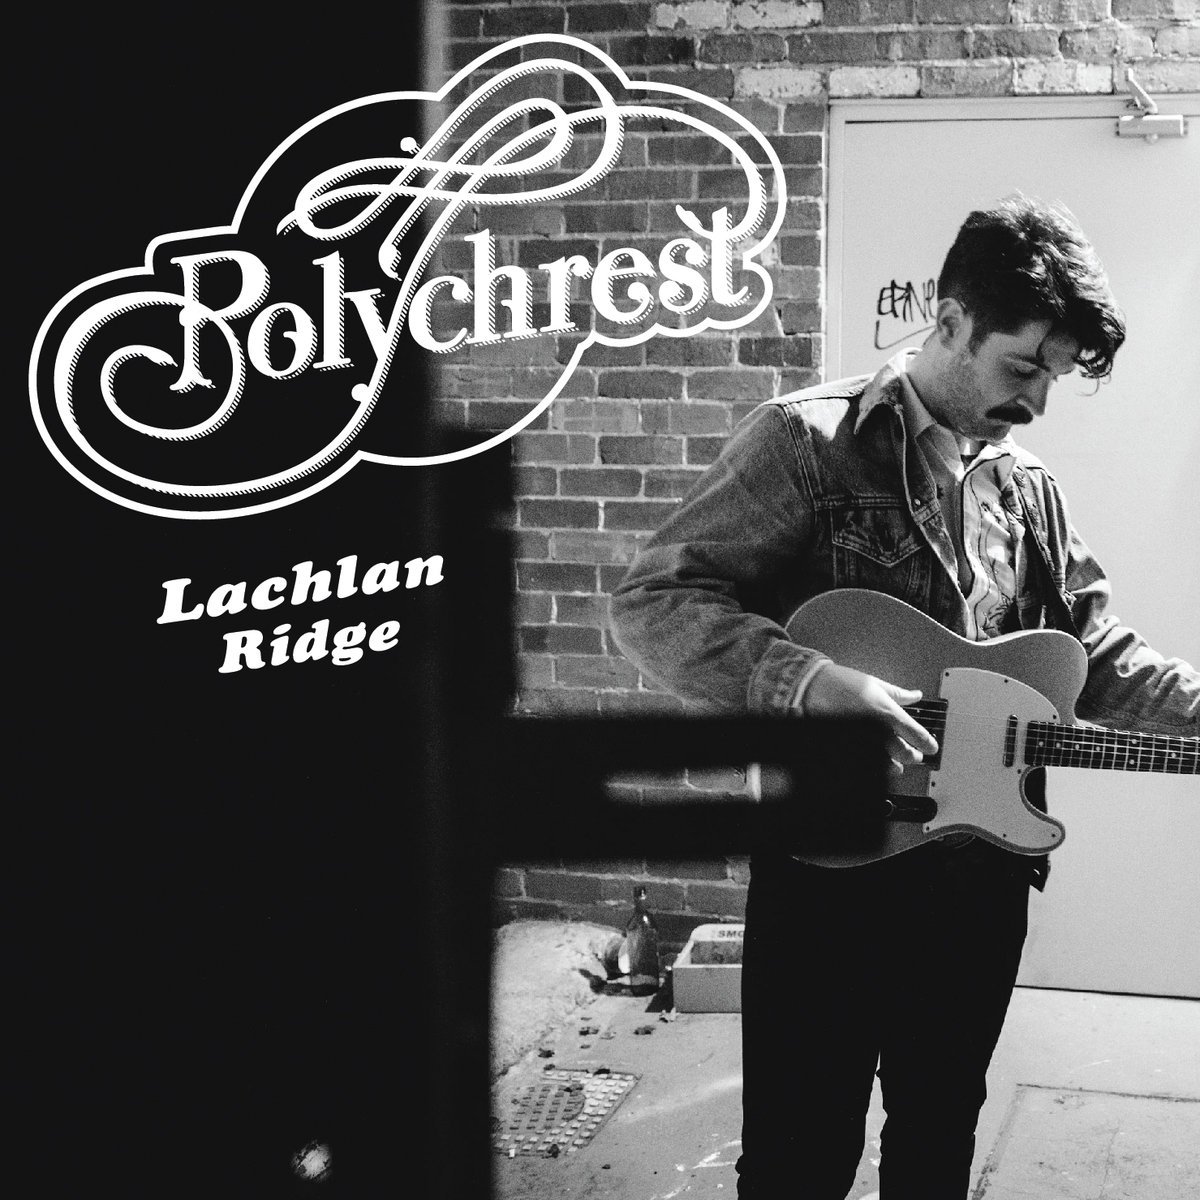 Lachlan Ridge - "Polychrest" [Mastering (JP) (Recorded by Tom Barnes at Soundpark Studios)]